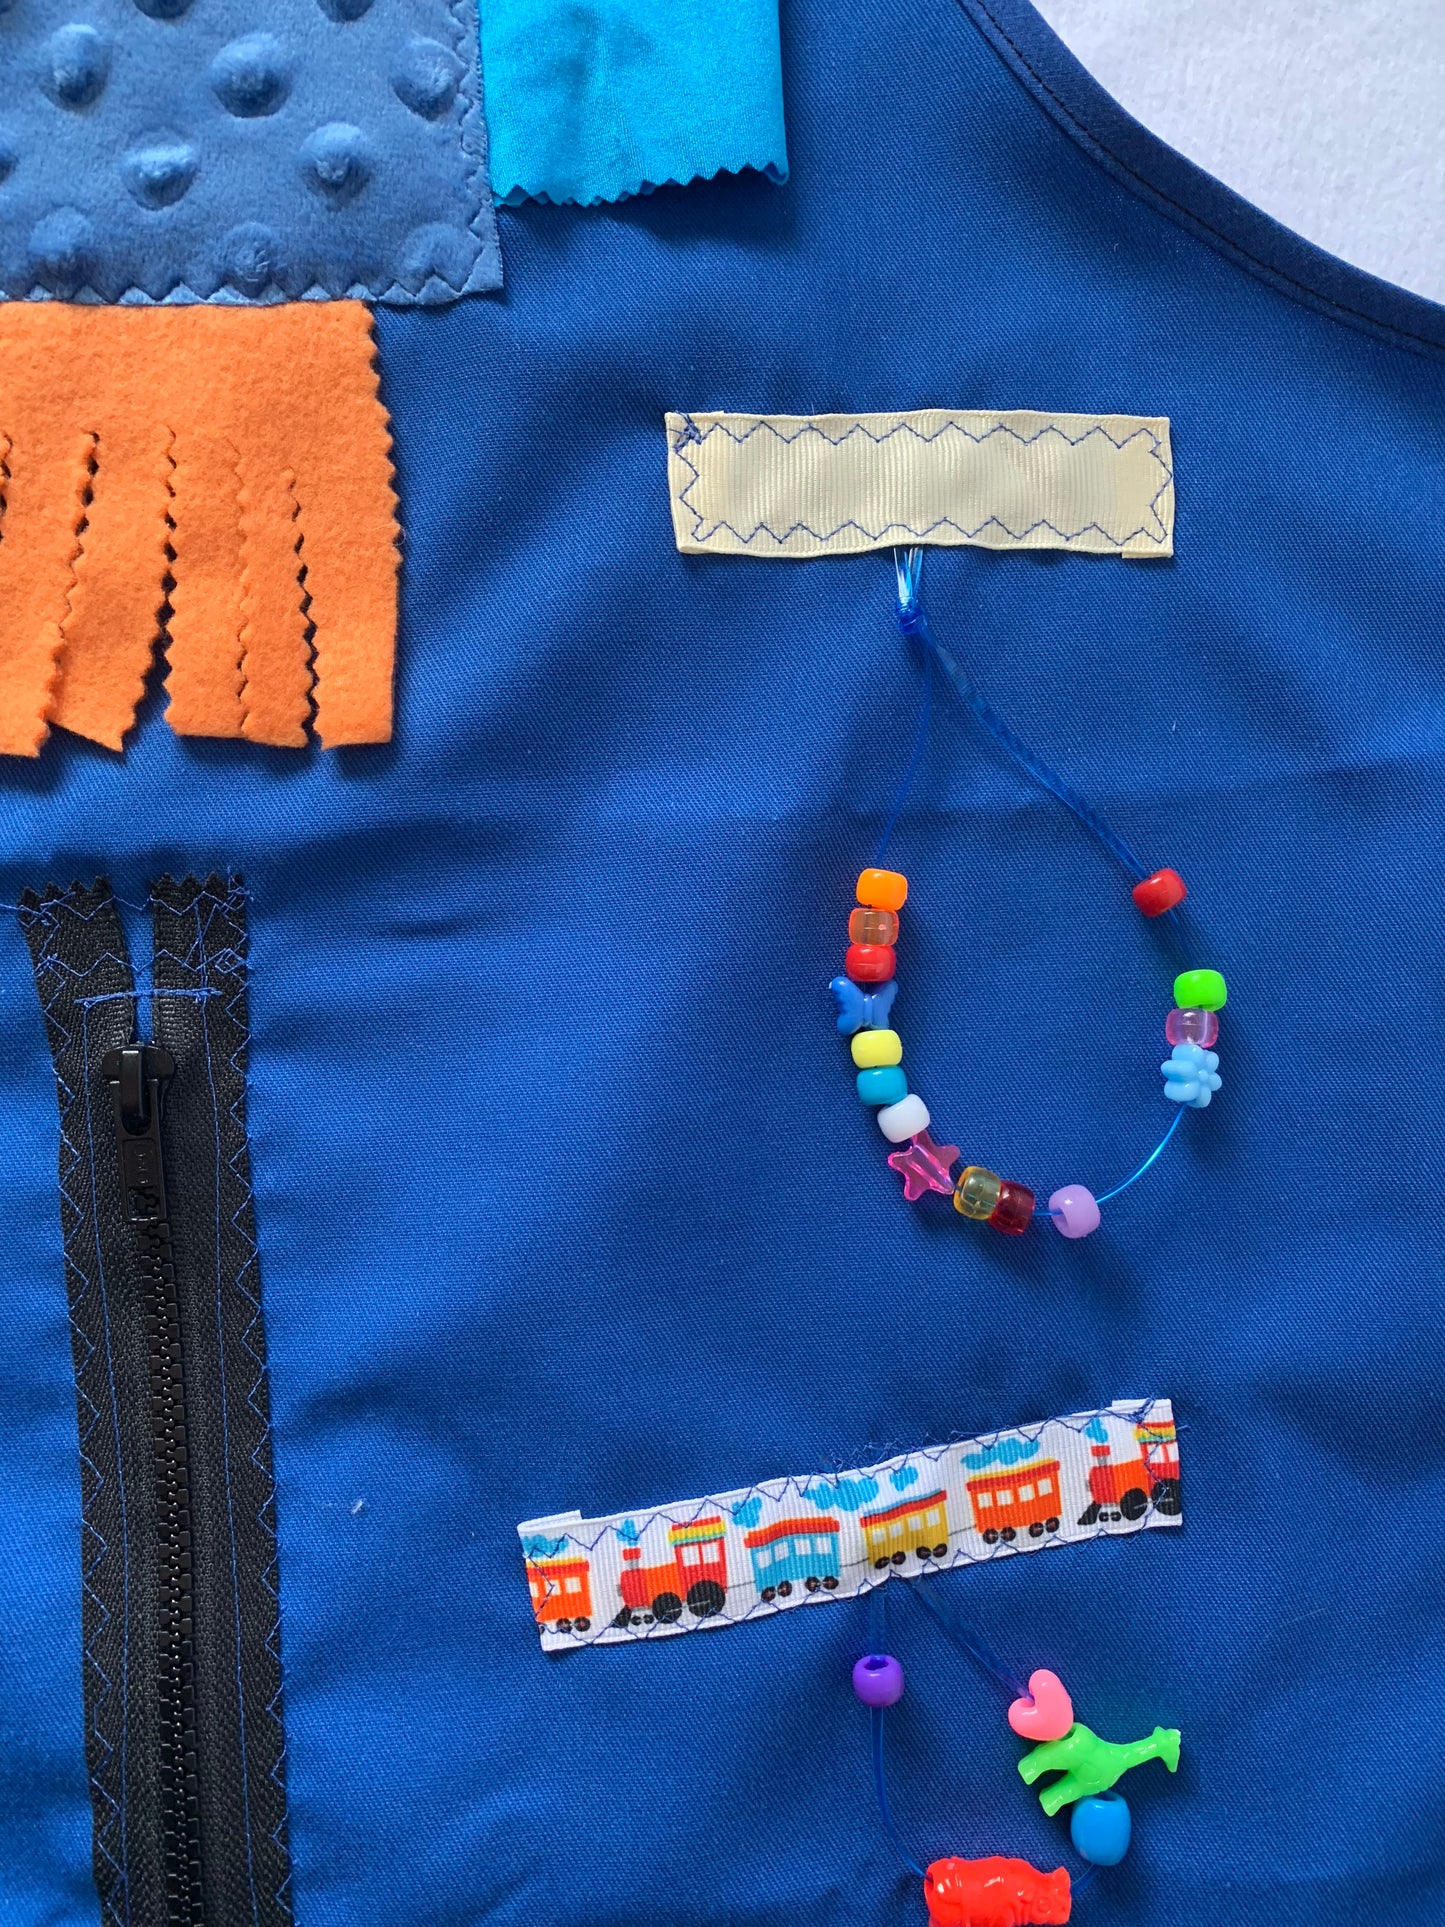 Adult Fidget Apron, tactile apron, various fidgets and ribbons, zipper, washable